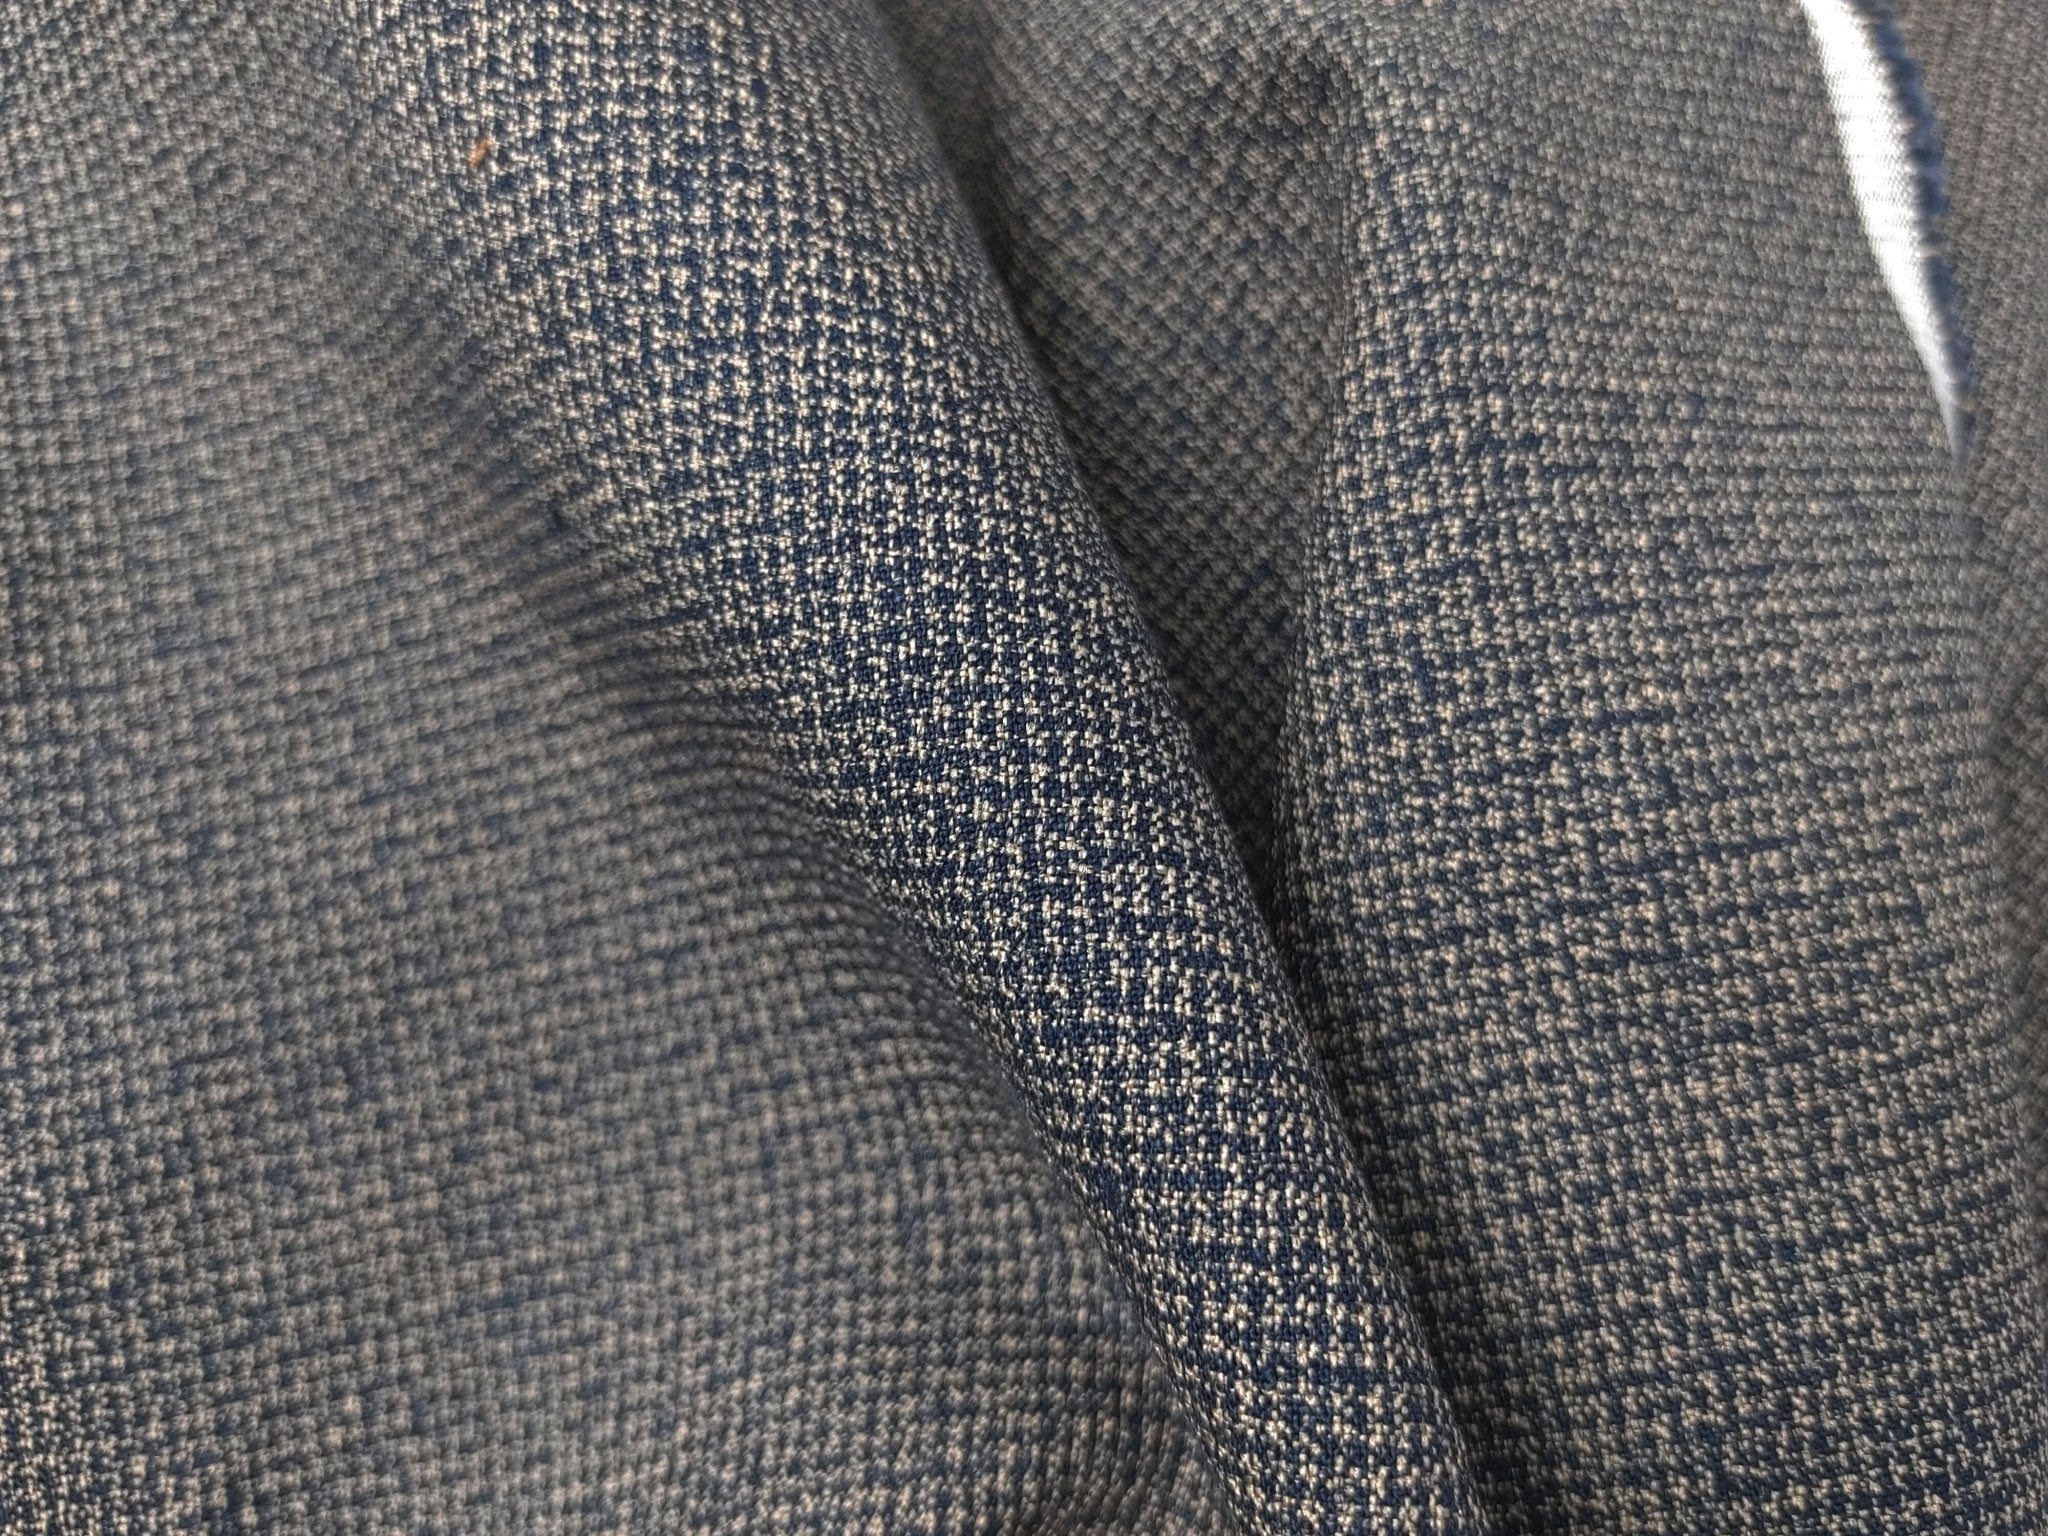 Serenity Linen Blend: Subtle Starcheck Fabric 2561 - The Linen Lab - Navy